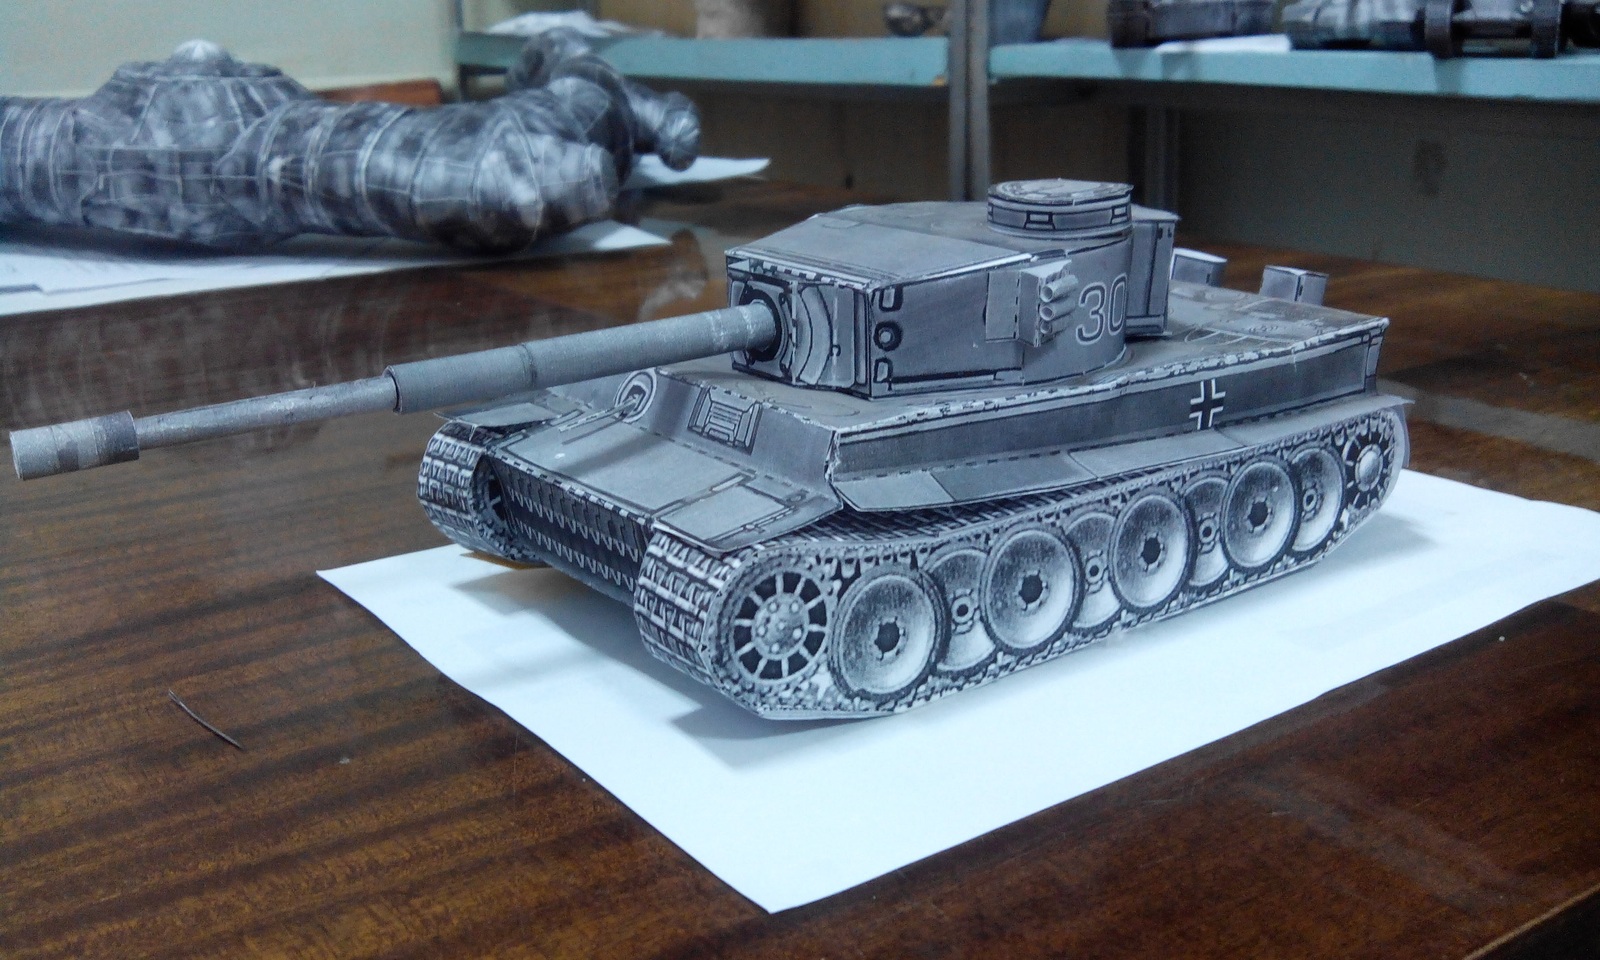 Paper tanks. - My, Tanks, World of tanks, Paper modeling, Modeling, Hobby, Needlework, Creation, Longpost, Papercraft